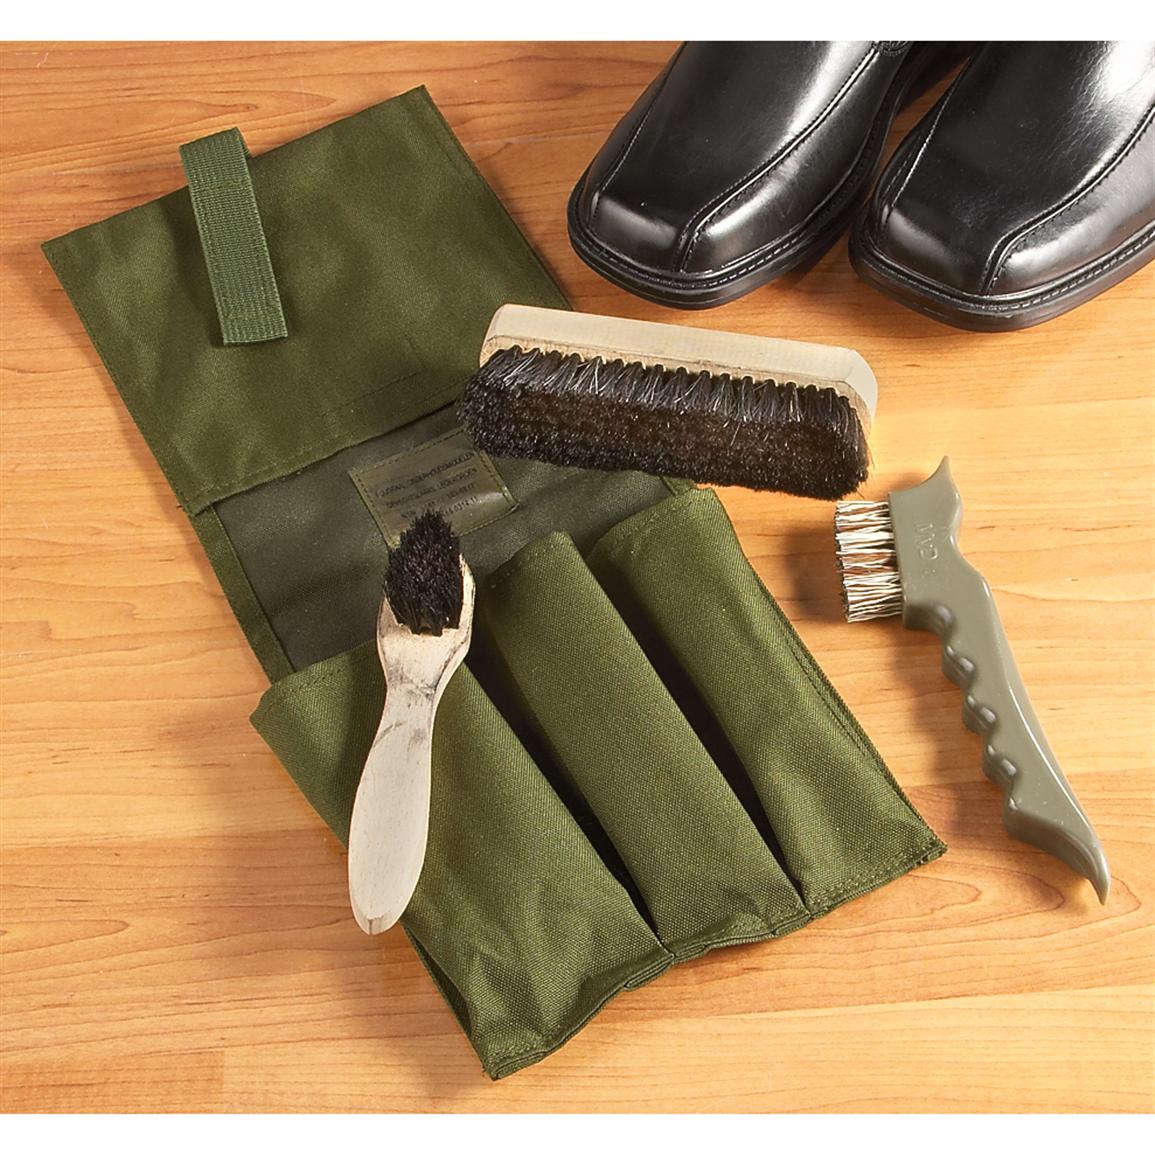 military boot polish kit